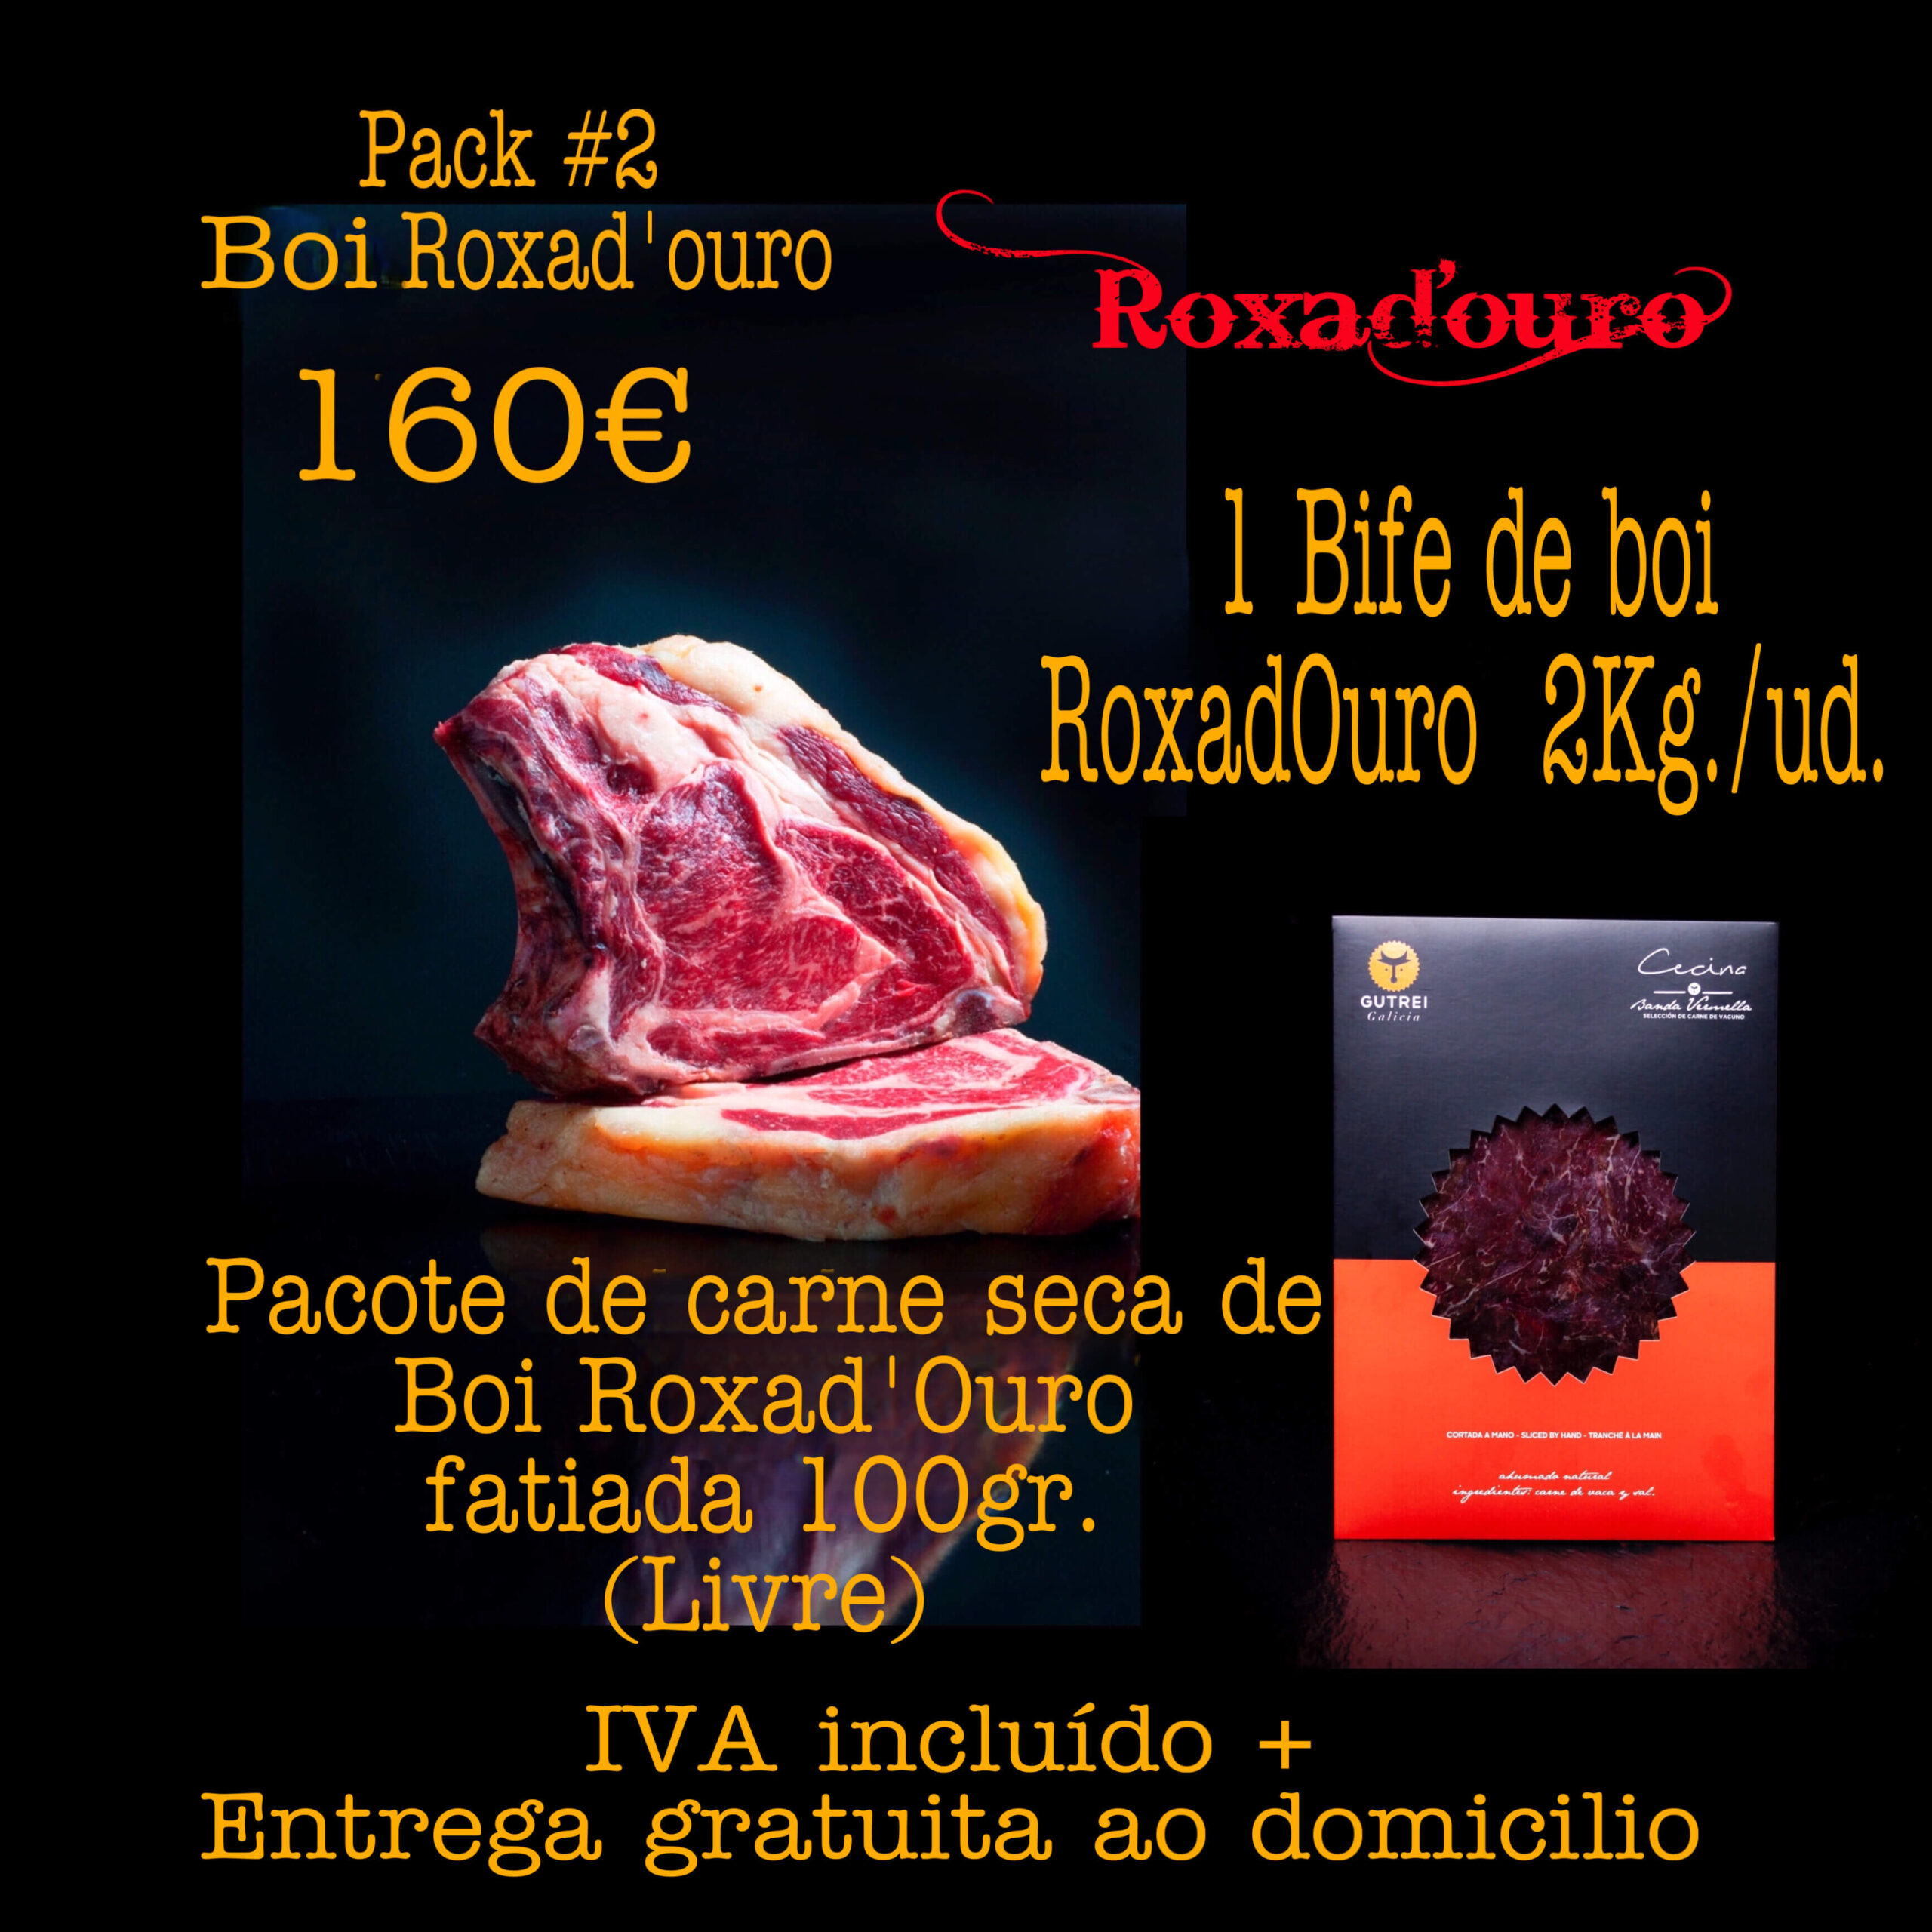 PACOTE: bife de boi RoxadOuro 2Kg + carne seca de boi fatiada